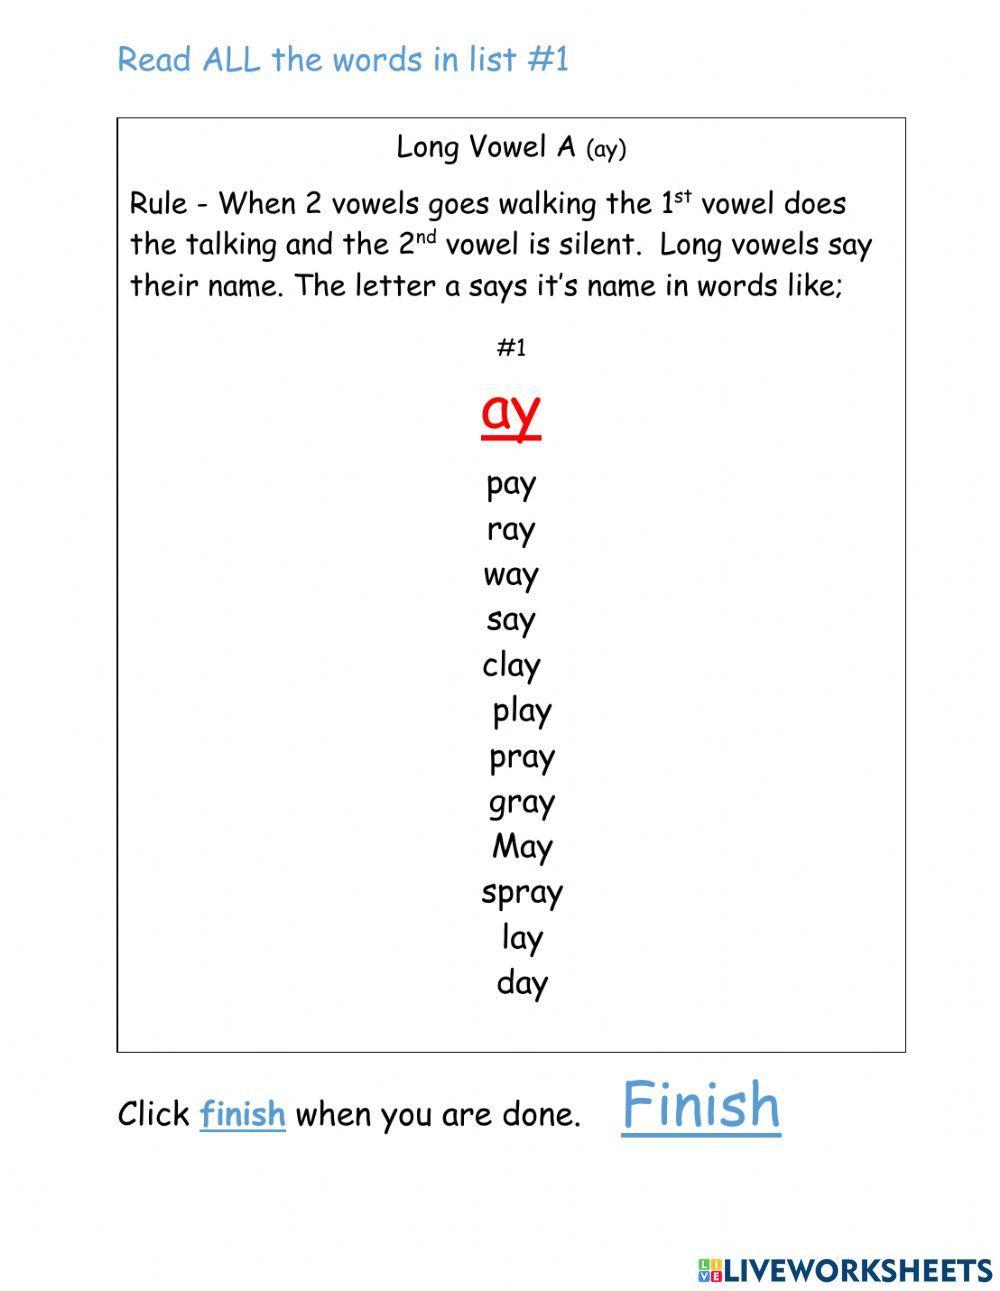 Long vowel a -AY- word list